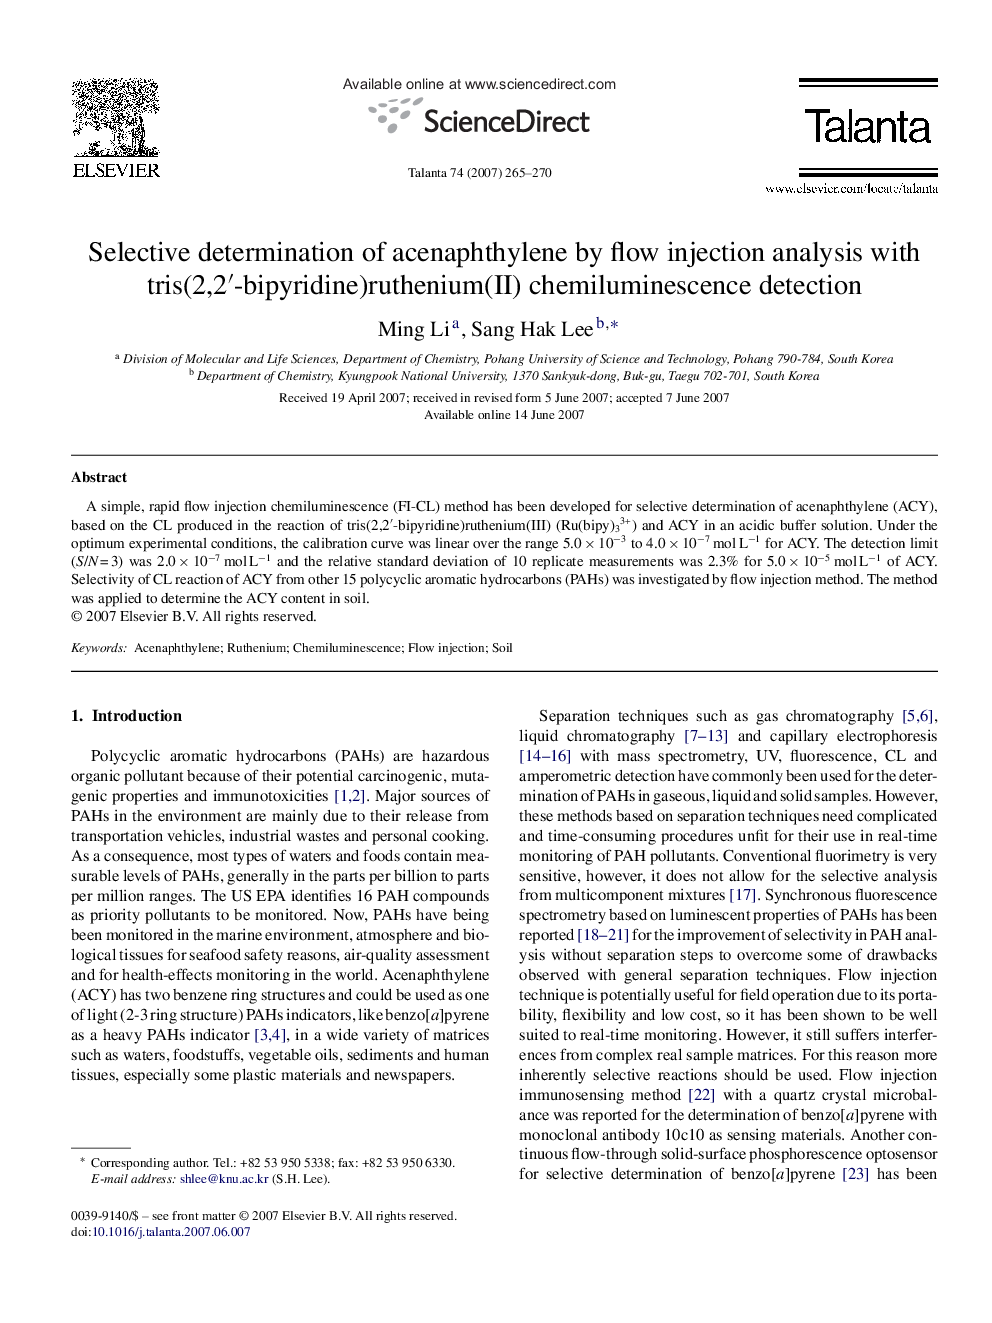 Selective determination of acenaphthylene by flow injection analysis with tris(2,2′-bipyridine)ruthenium(II) chemiluminescence detection